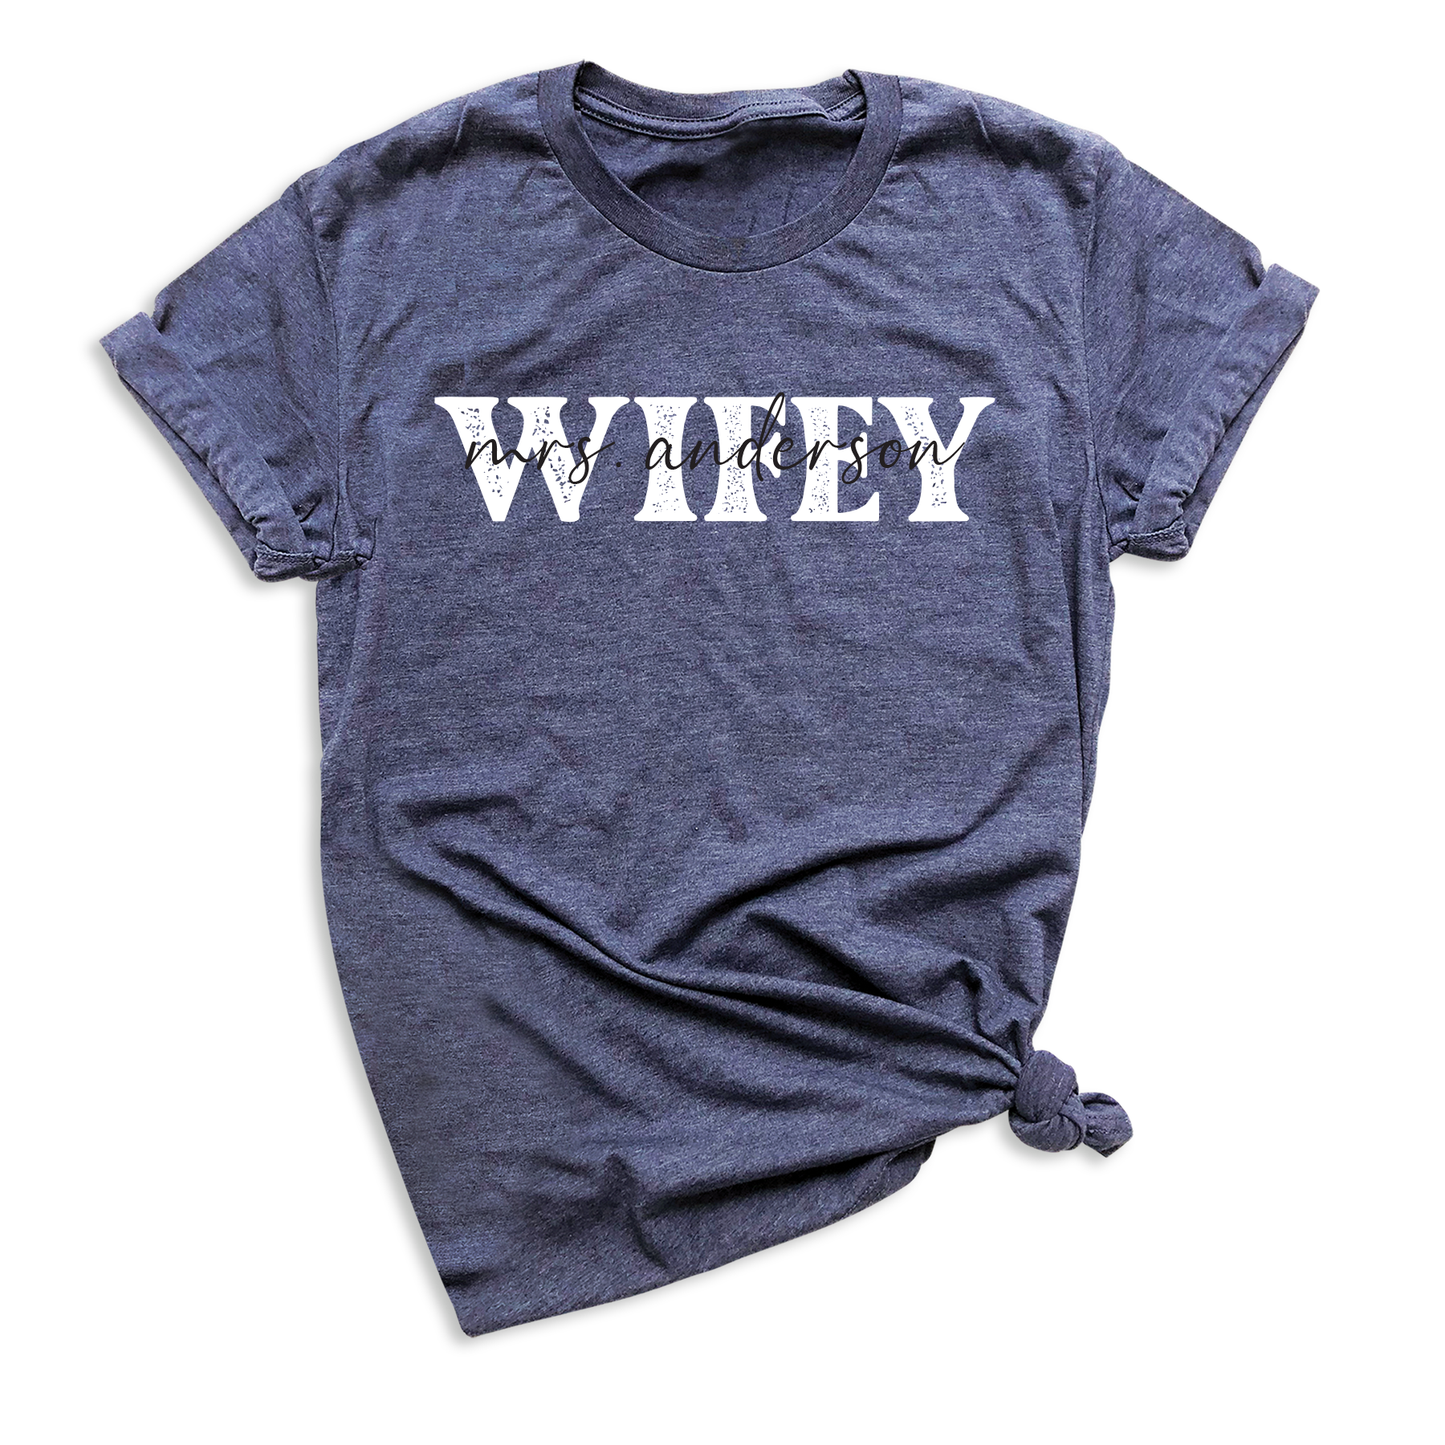 Wifey Personalize T-Shirt